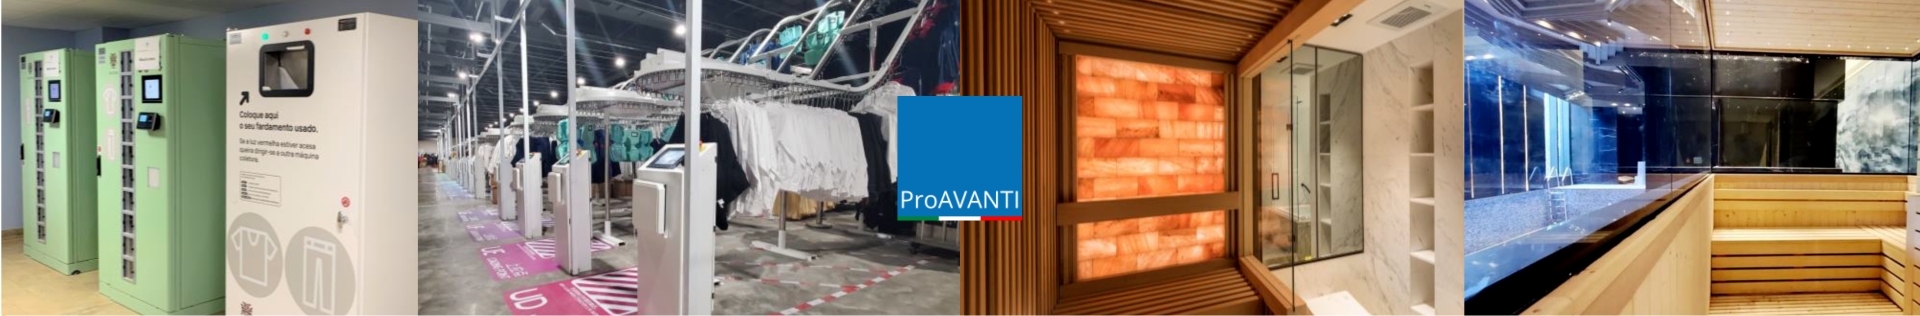 ProAVANTI Automated Uniform Storage, Retreival and Tracking System, SPA construction, Sauna installation Hong Kong